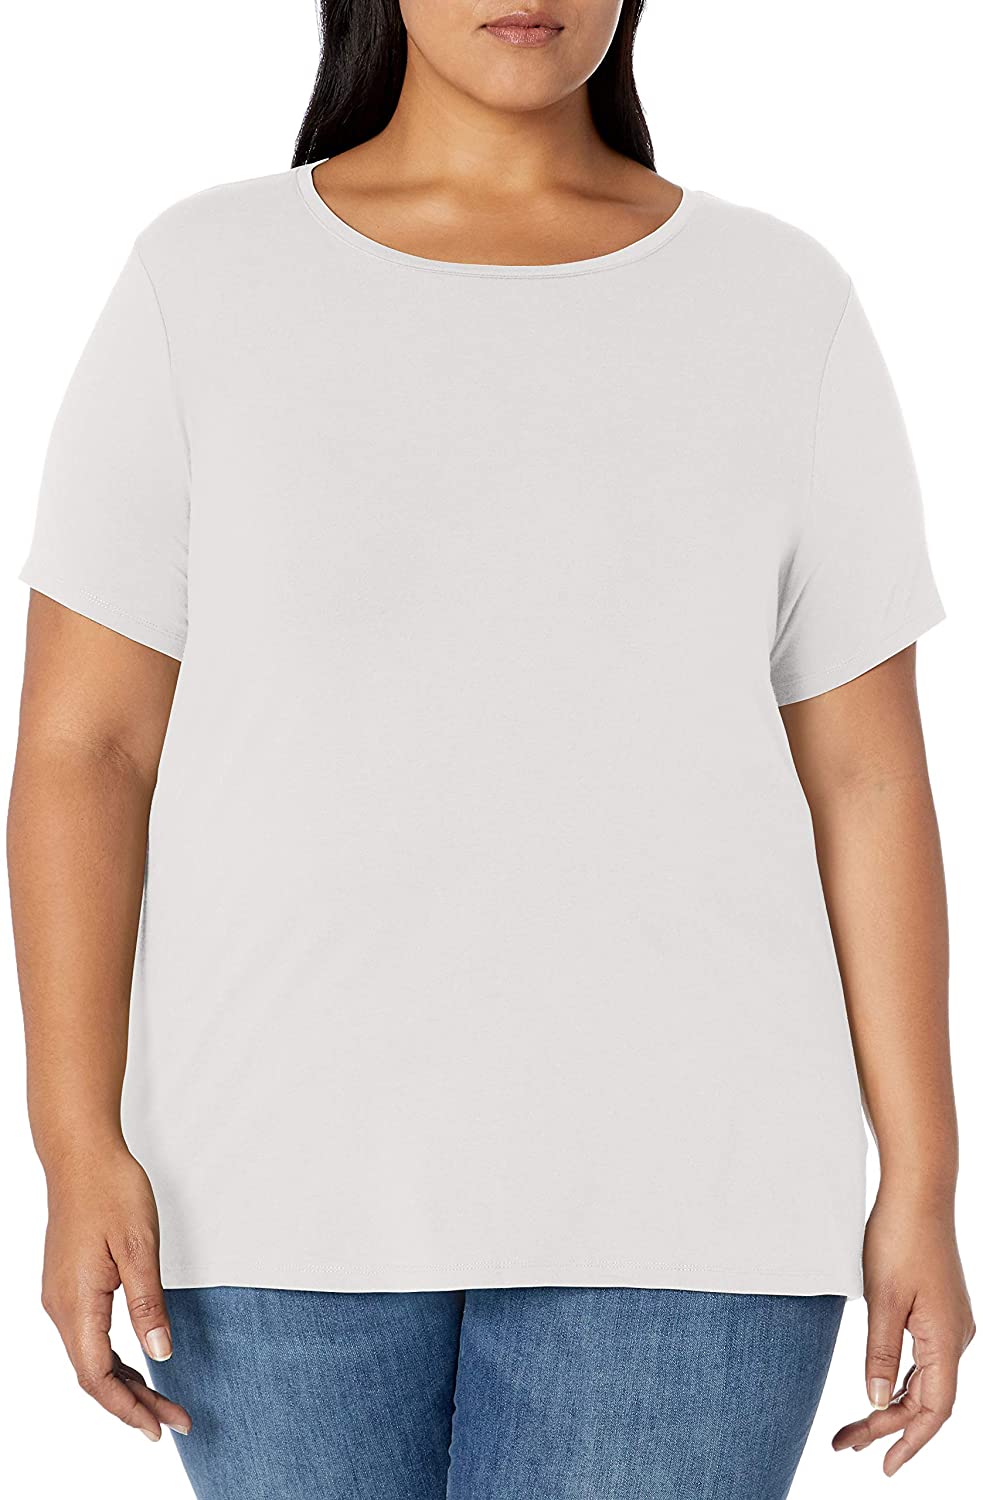 Price:$6.14    Amazon Essentials Women's Plus Size Short-Sleeve Crewneck T-Shirt  Clothing